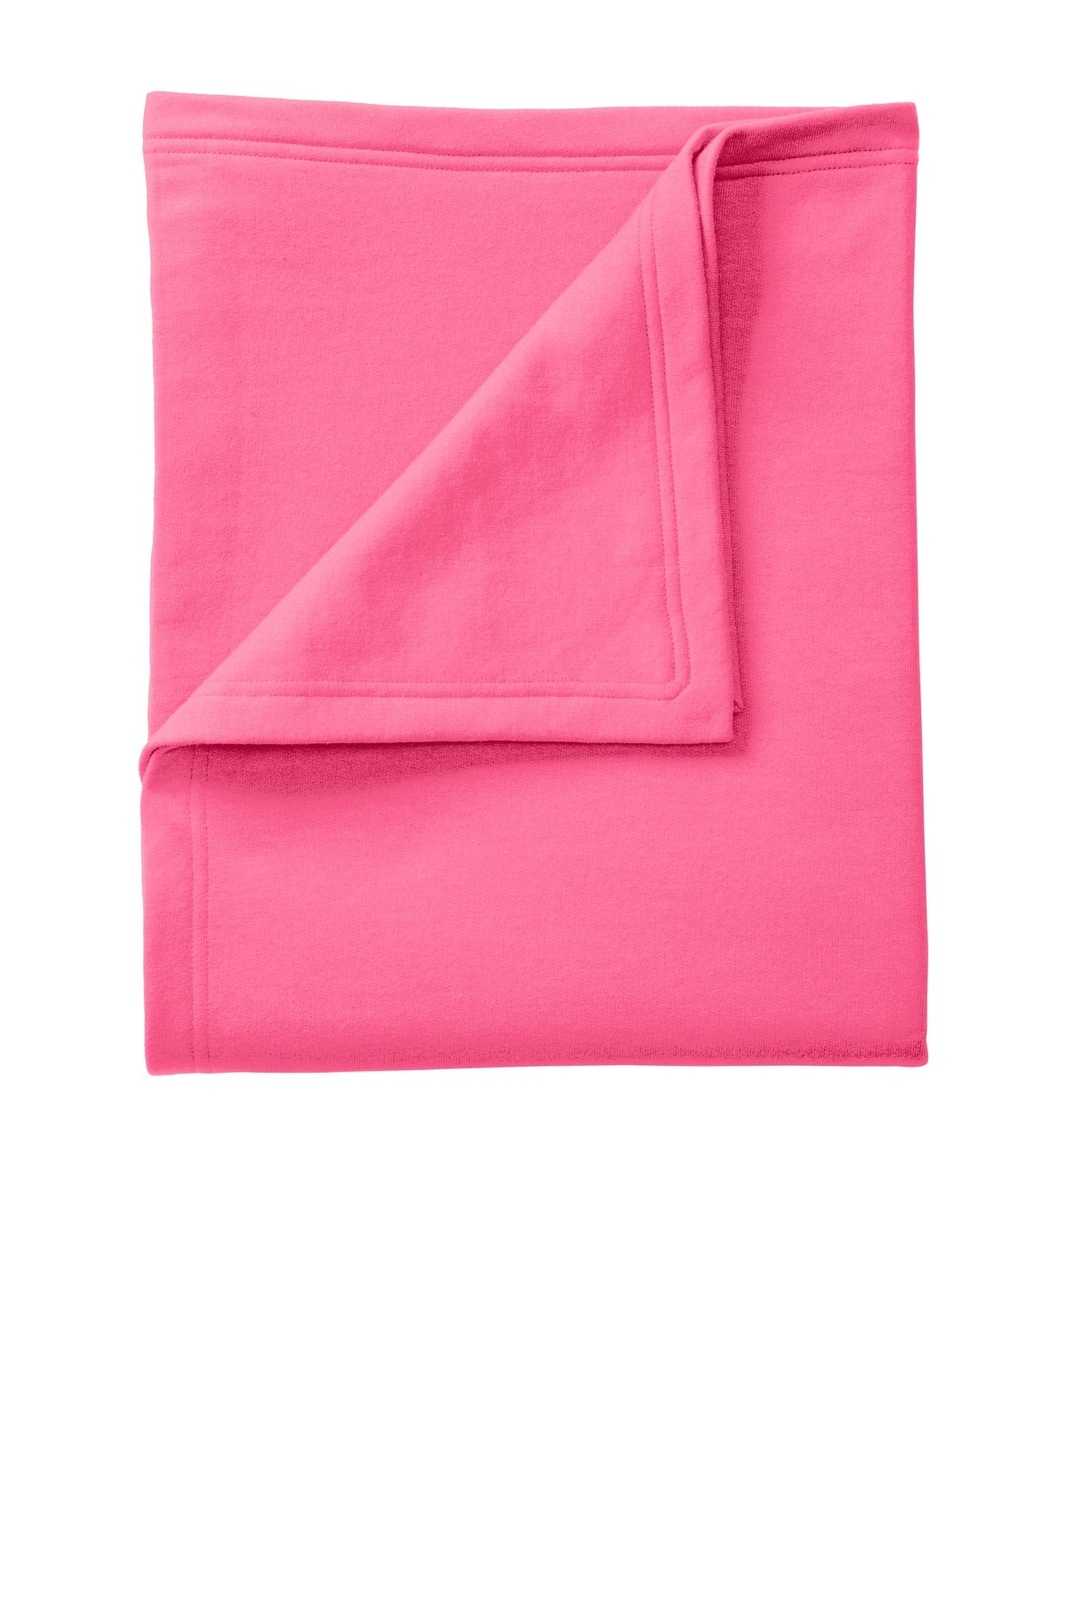 Port & Company BP78 Core Fleece Sweatshirt Blanket - Neon Pink - HIT a Double - 1